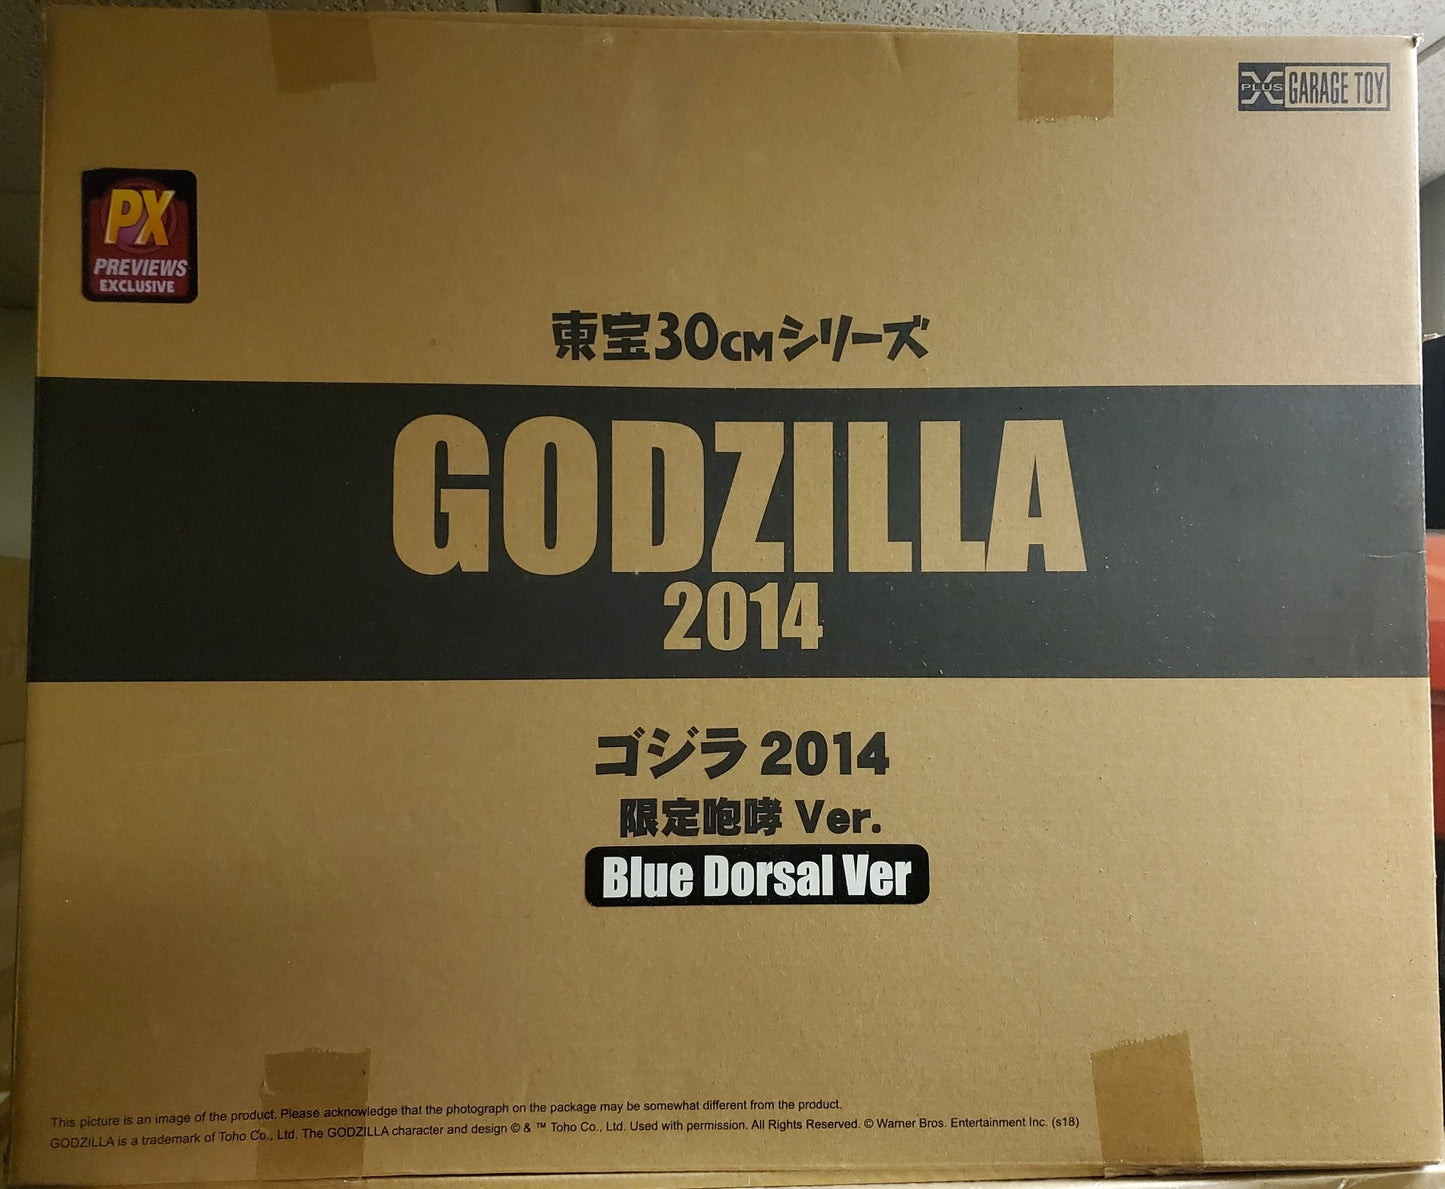 Godzilla 2014 12 inch series Blue Dorsal version PX Exclusive figure 